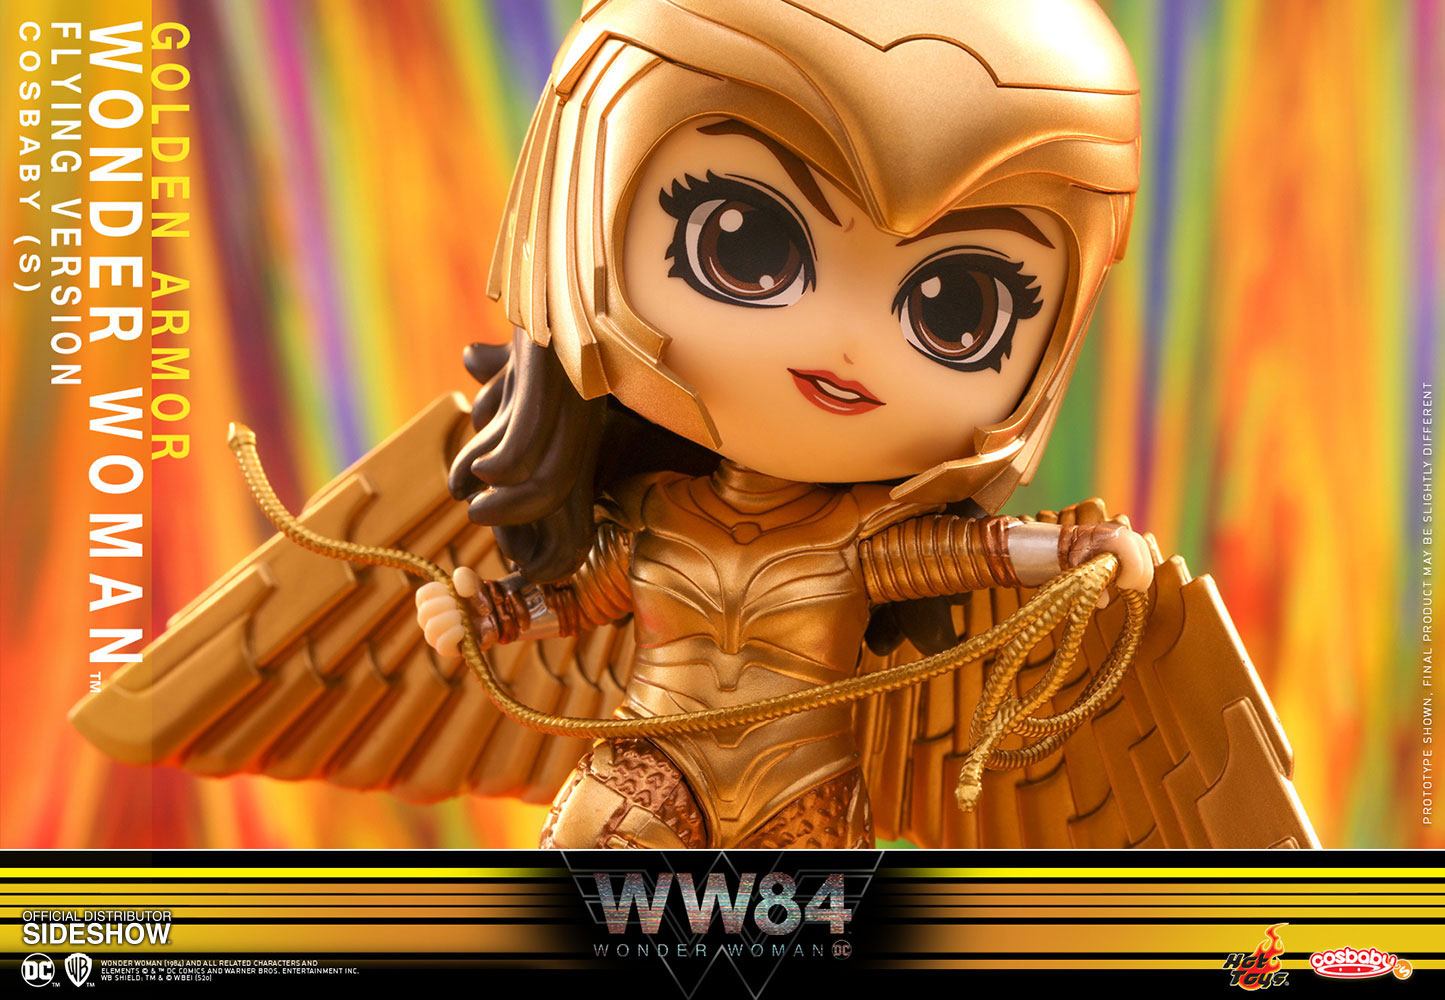 Wonder Woman 1984 Cosbaby (S) Mini Figure Golden Armor Wonder Woman (Flying Version) 10 cm